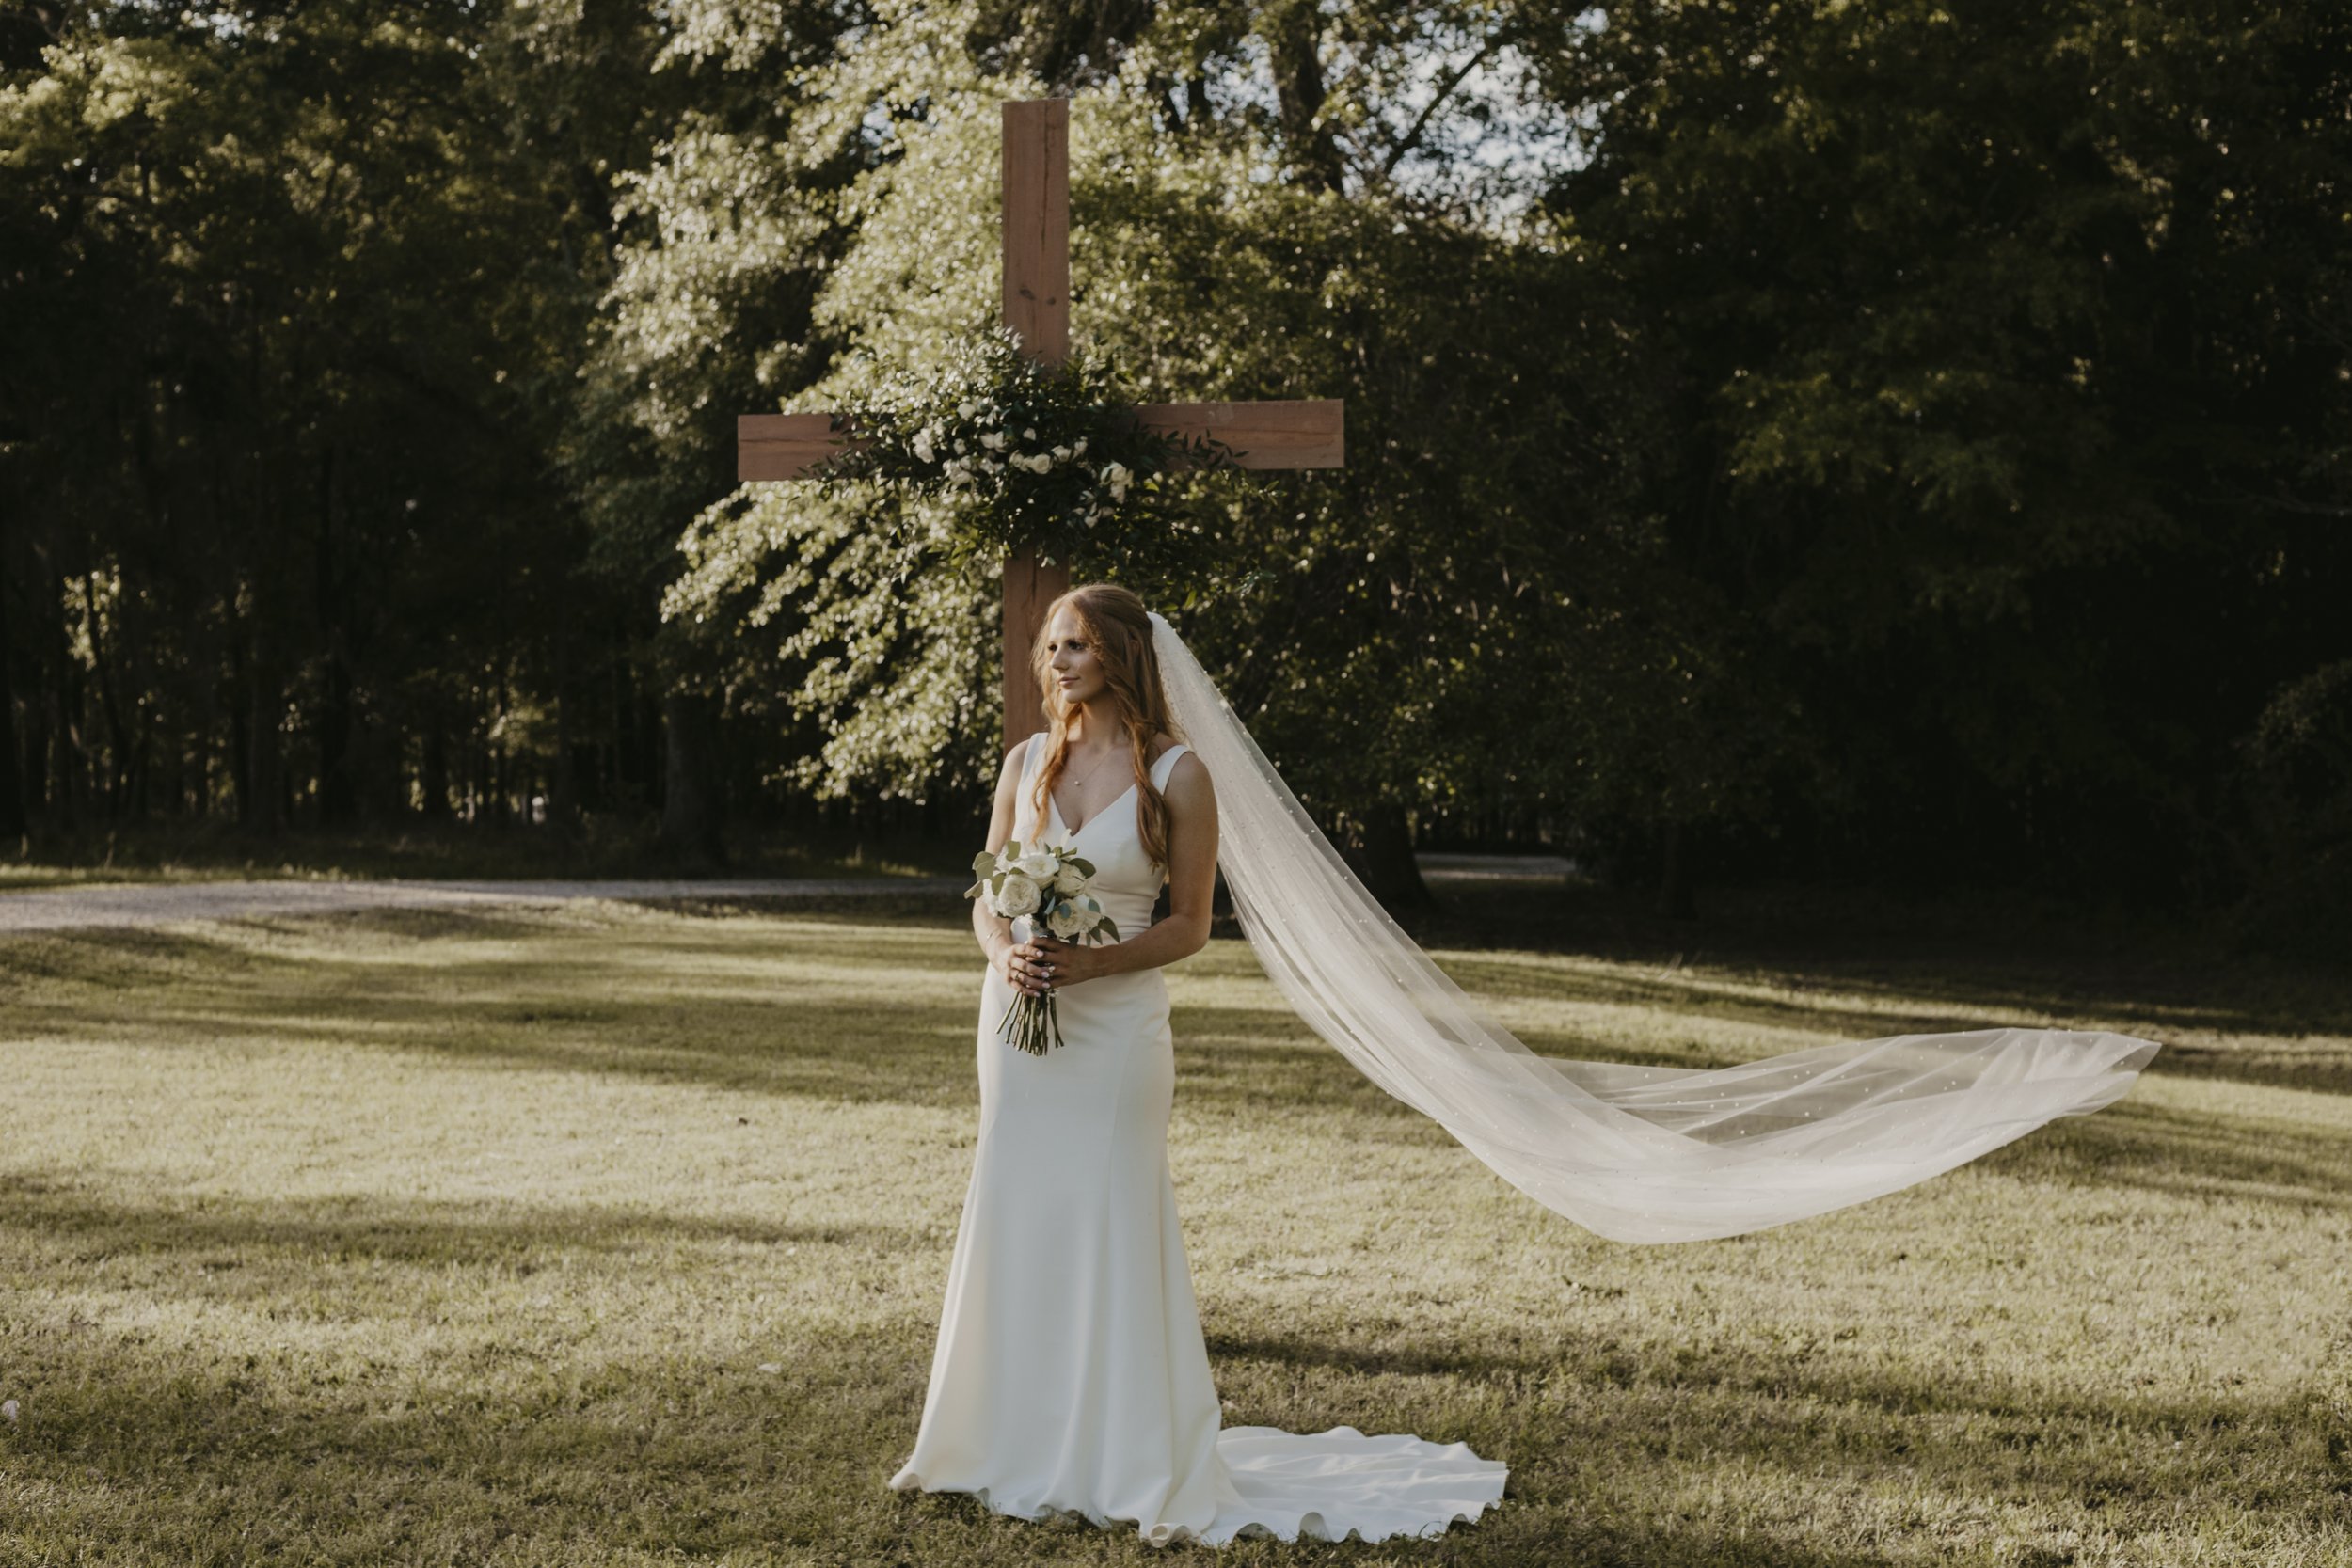 ivory-and-beau-bride-teasie-pictured-in-romantic-sleek-modern-crepe-wedding-dress-named-theodora-by-rebecca-ingram-purchased-from-savannah-bridal-shop-ivory-and-beau-2.JPG